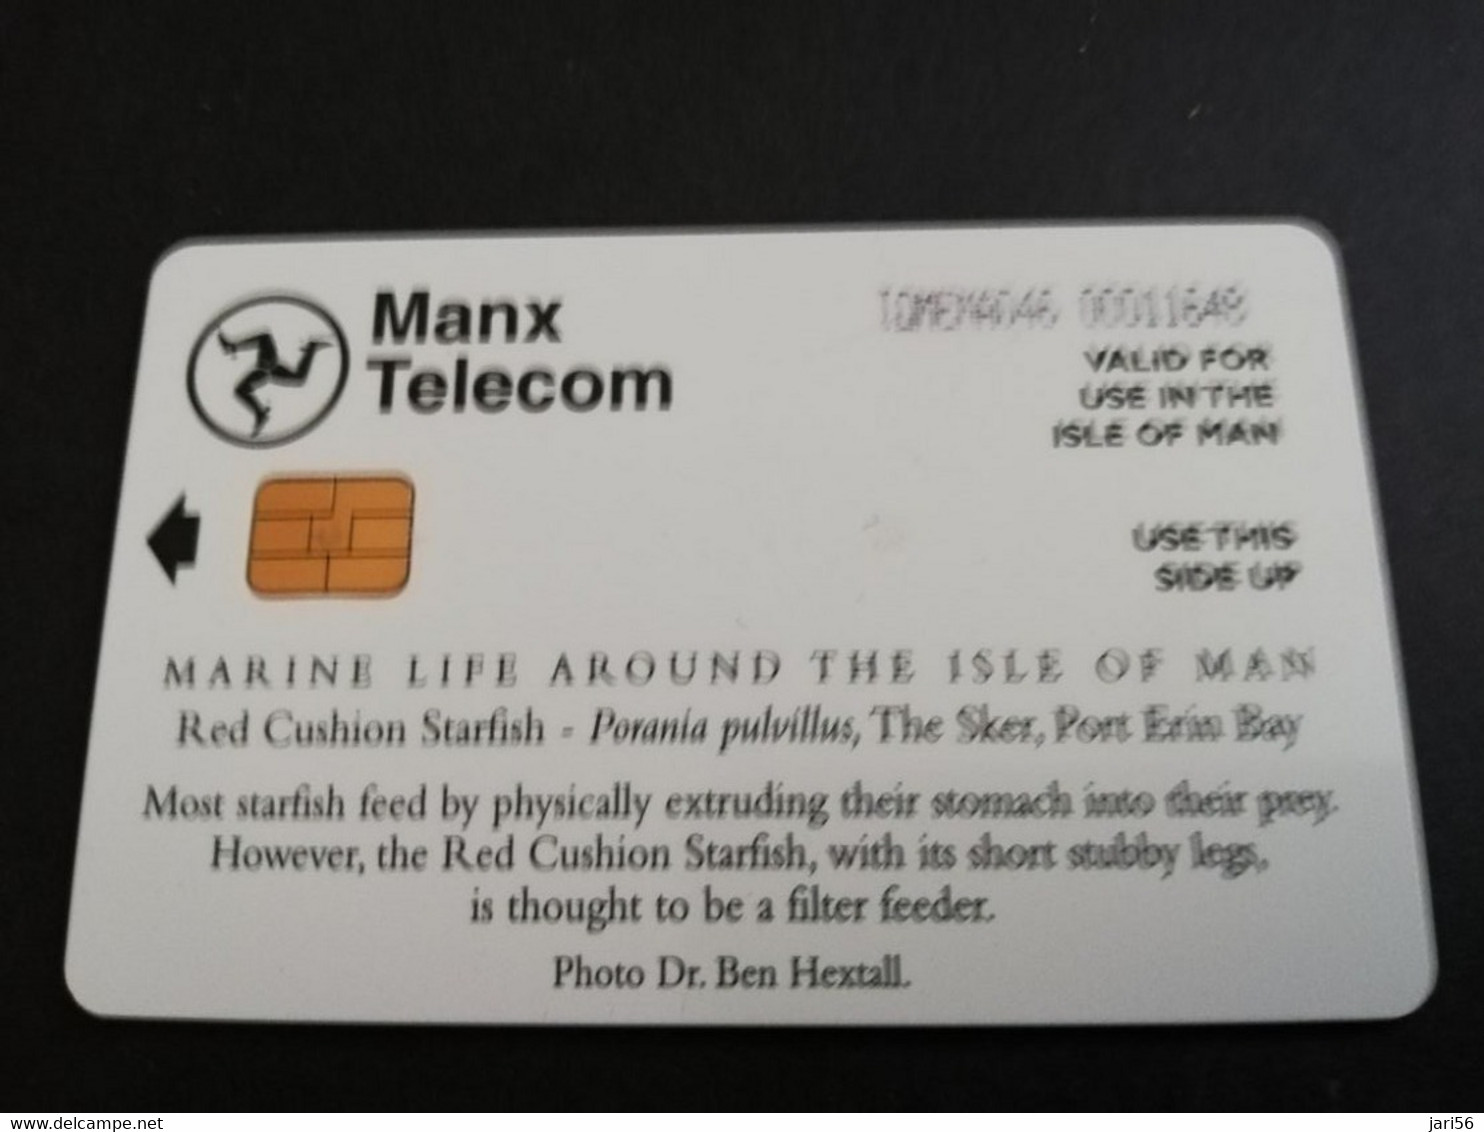 ISLE OF MAN 2 POUND  MANX TELECOM  21 UNITS / SEASTAR            CHIP   ** 5268** - Man (Isle Of)